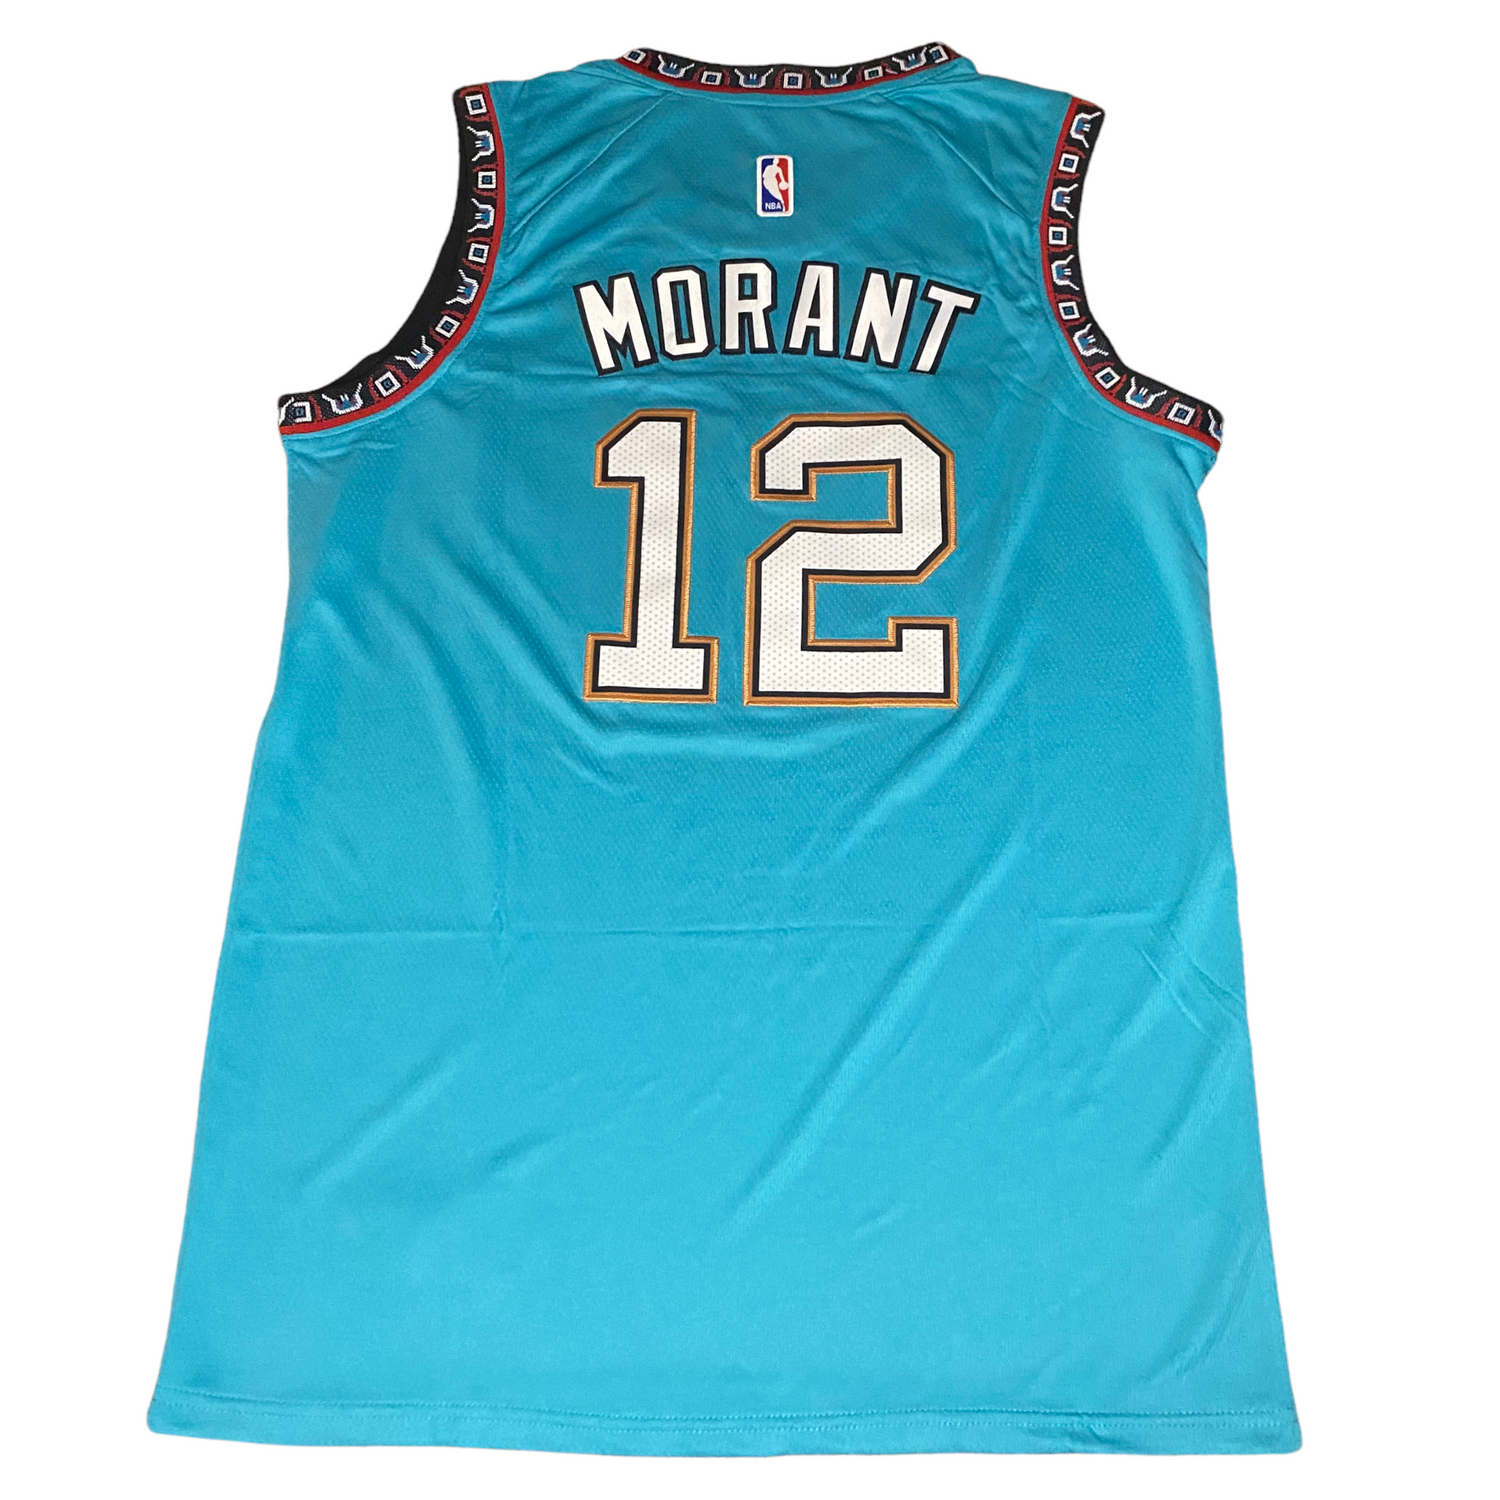 Ja Morant Vancouver Grizzlies Jersey : r/basketballjerseys